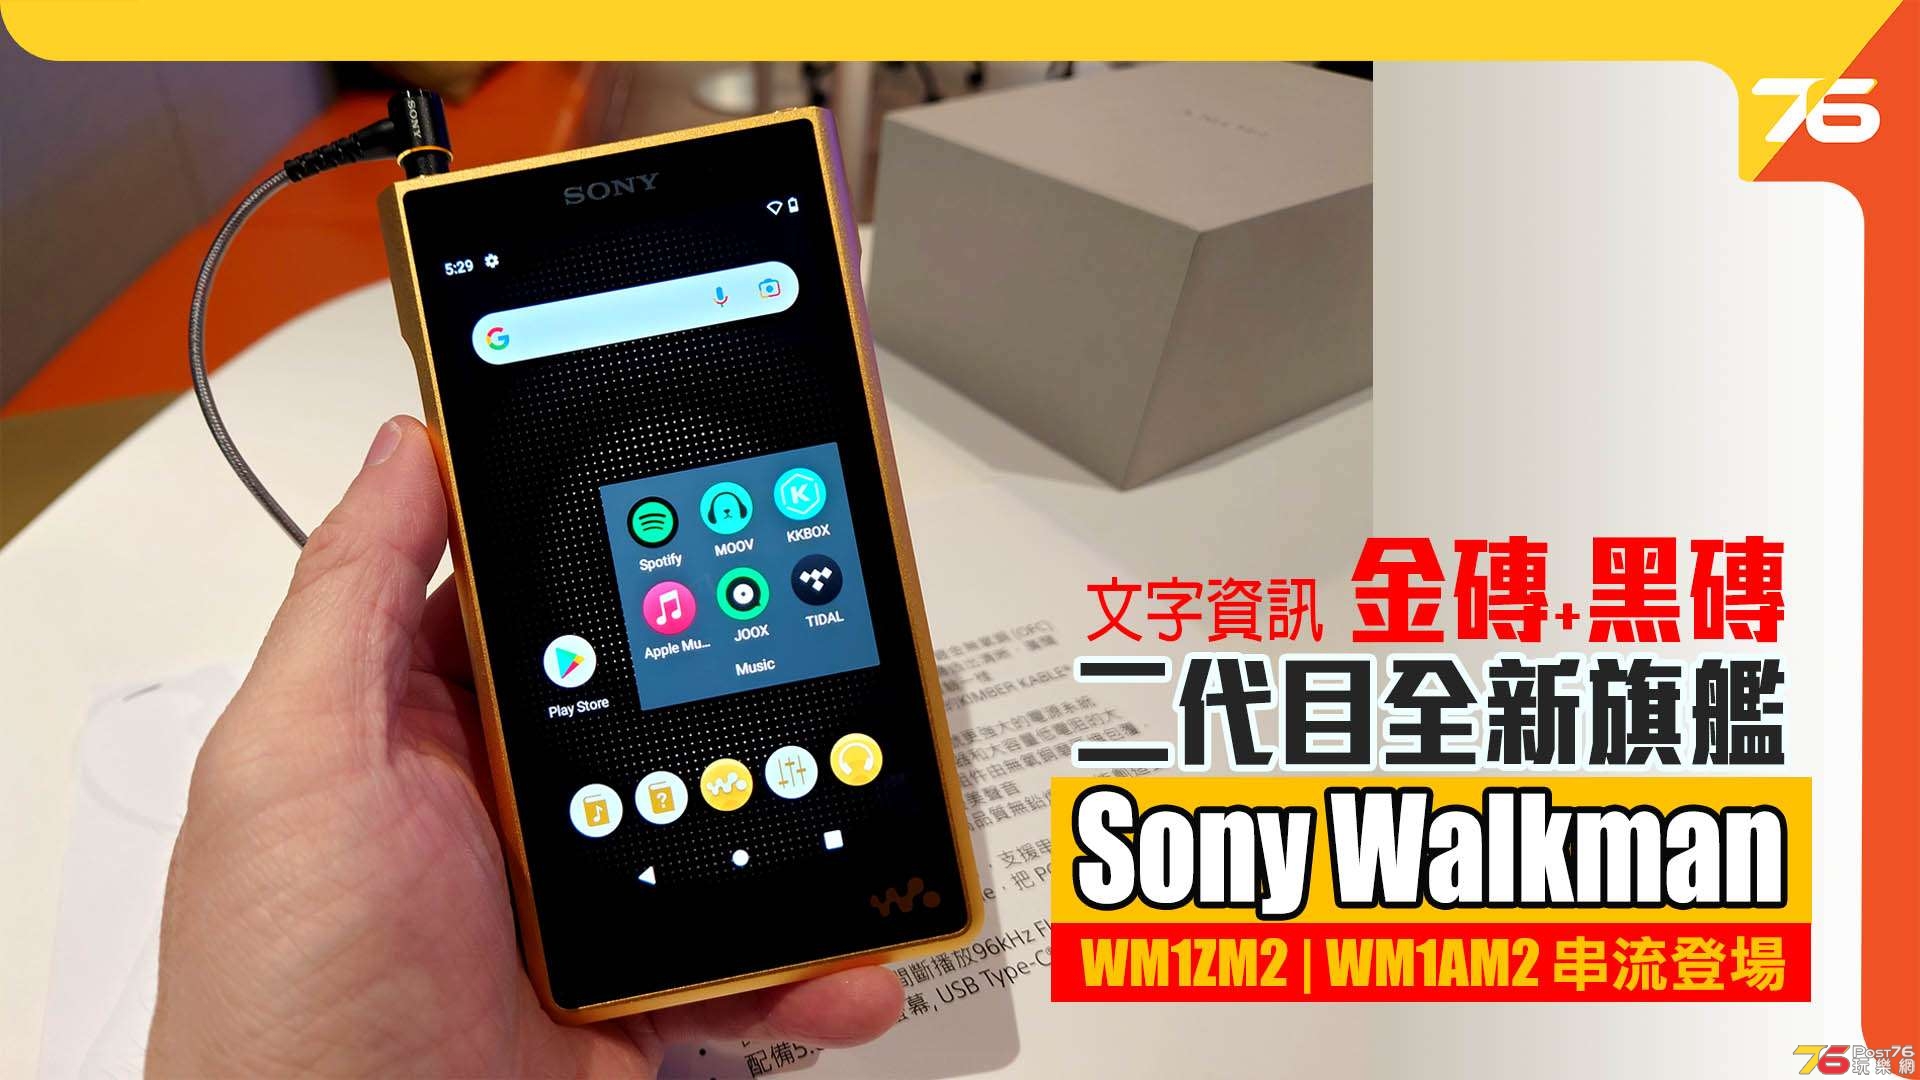 Sony Signature Series Walkman wm1zm2 wm1am2 press 1.jpg